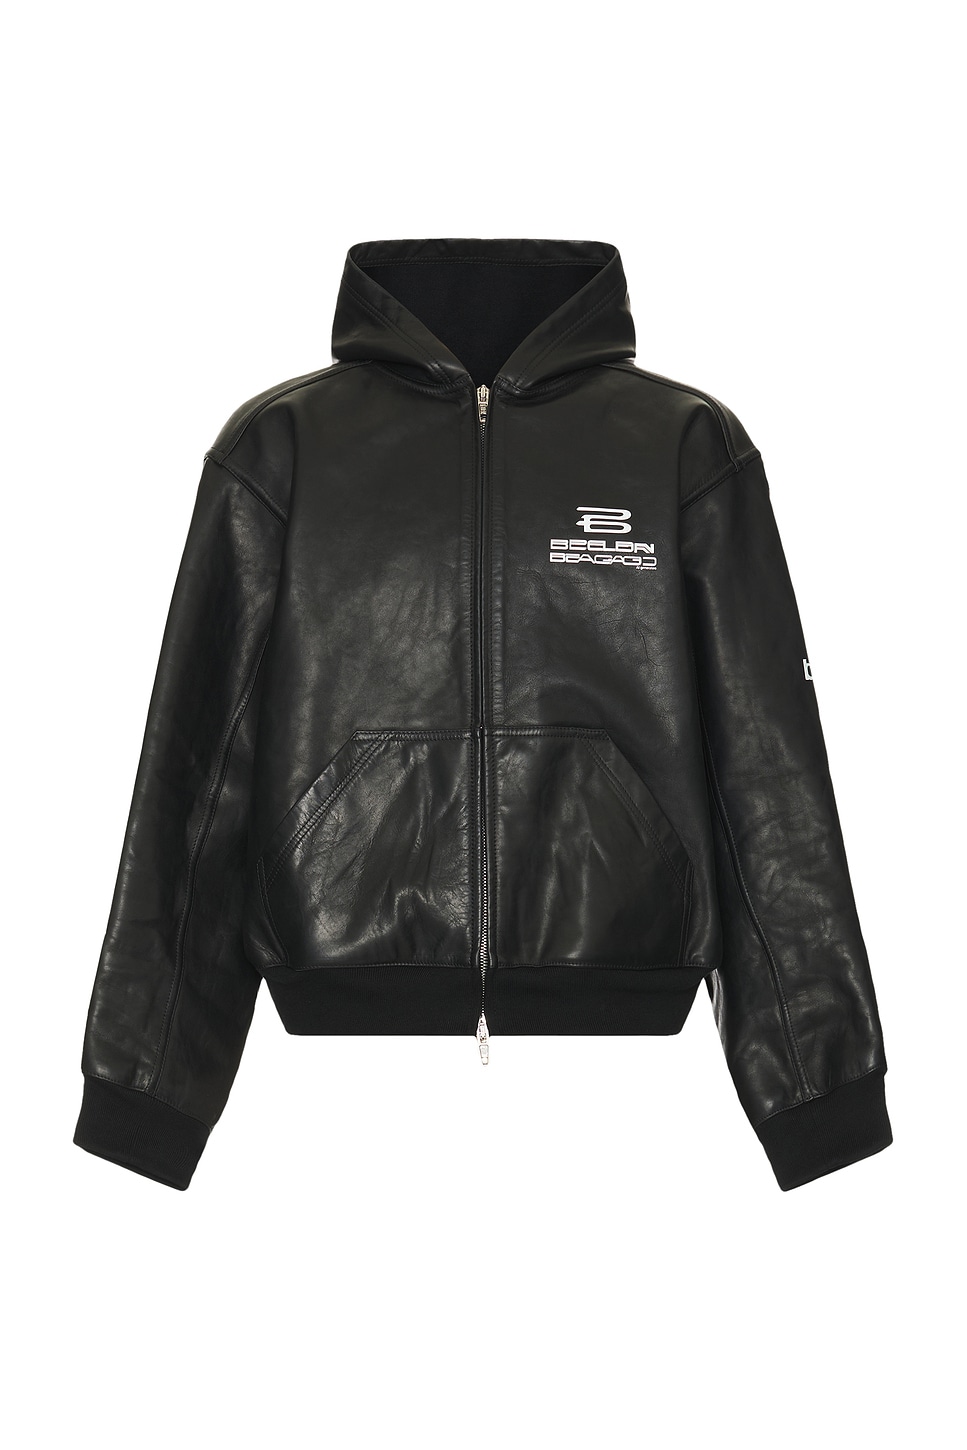 Image 1 of Balenciaga Lined Zip Up Hoodie Jacket in Black